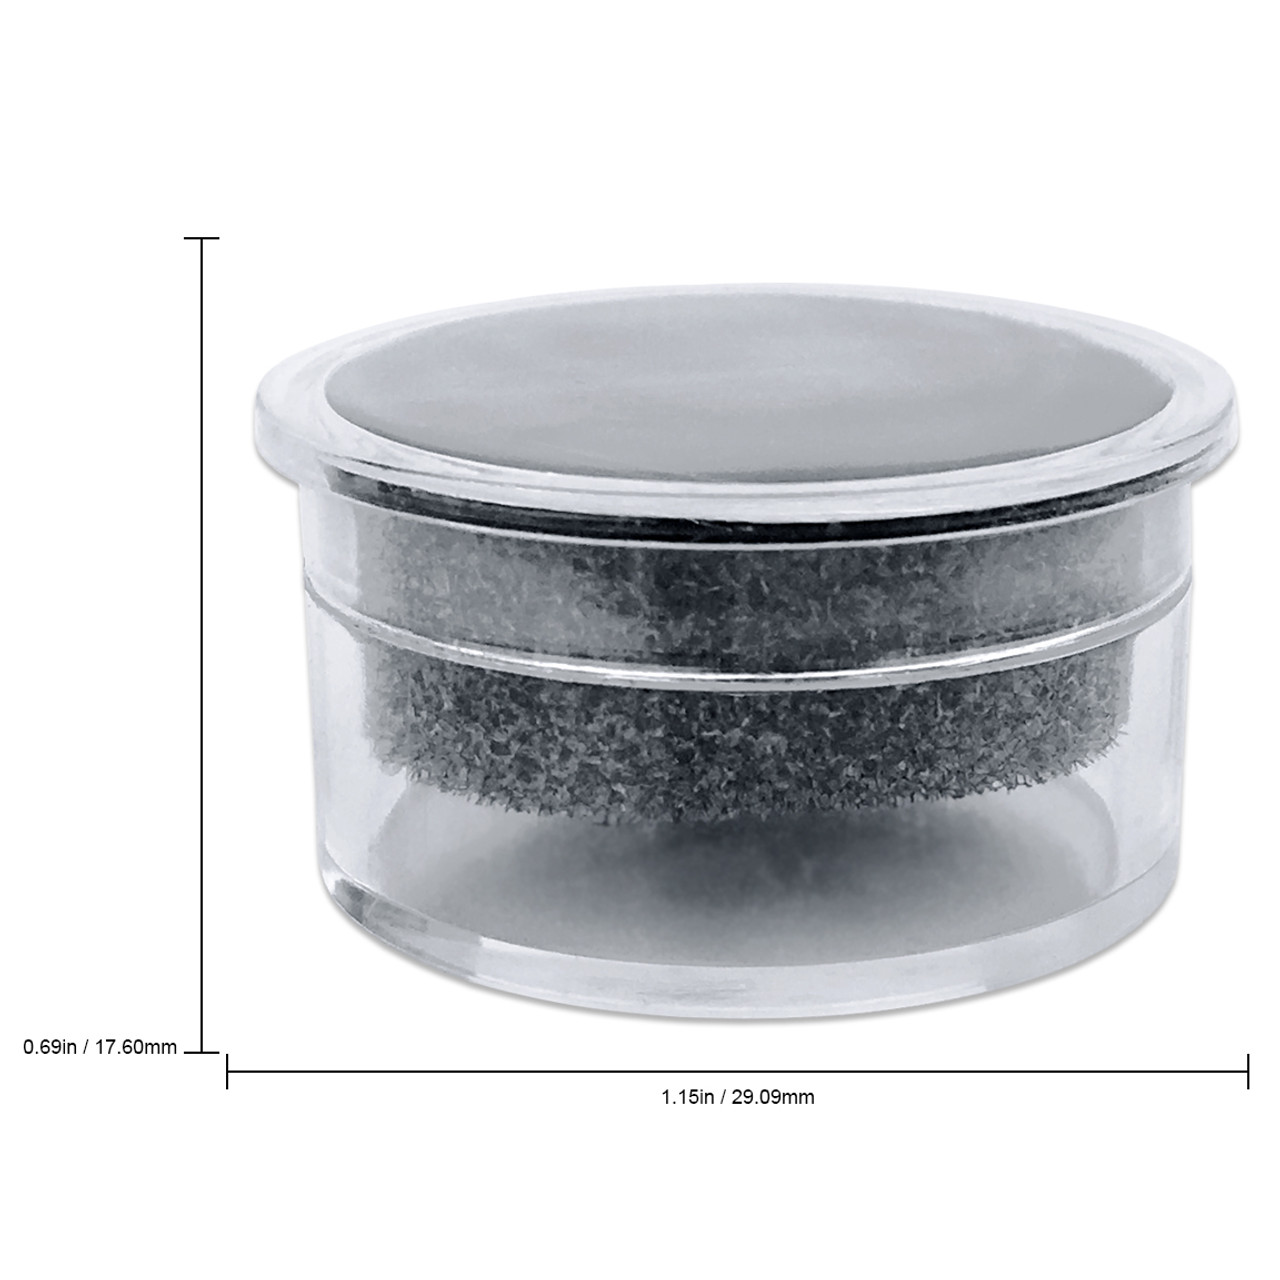 50 Jar Display Tray with Foam Jar Inserts